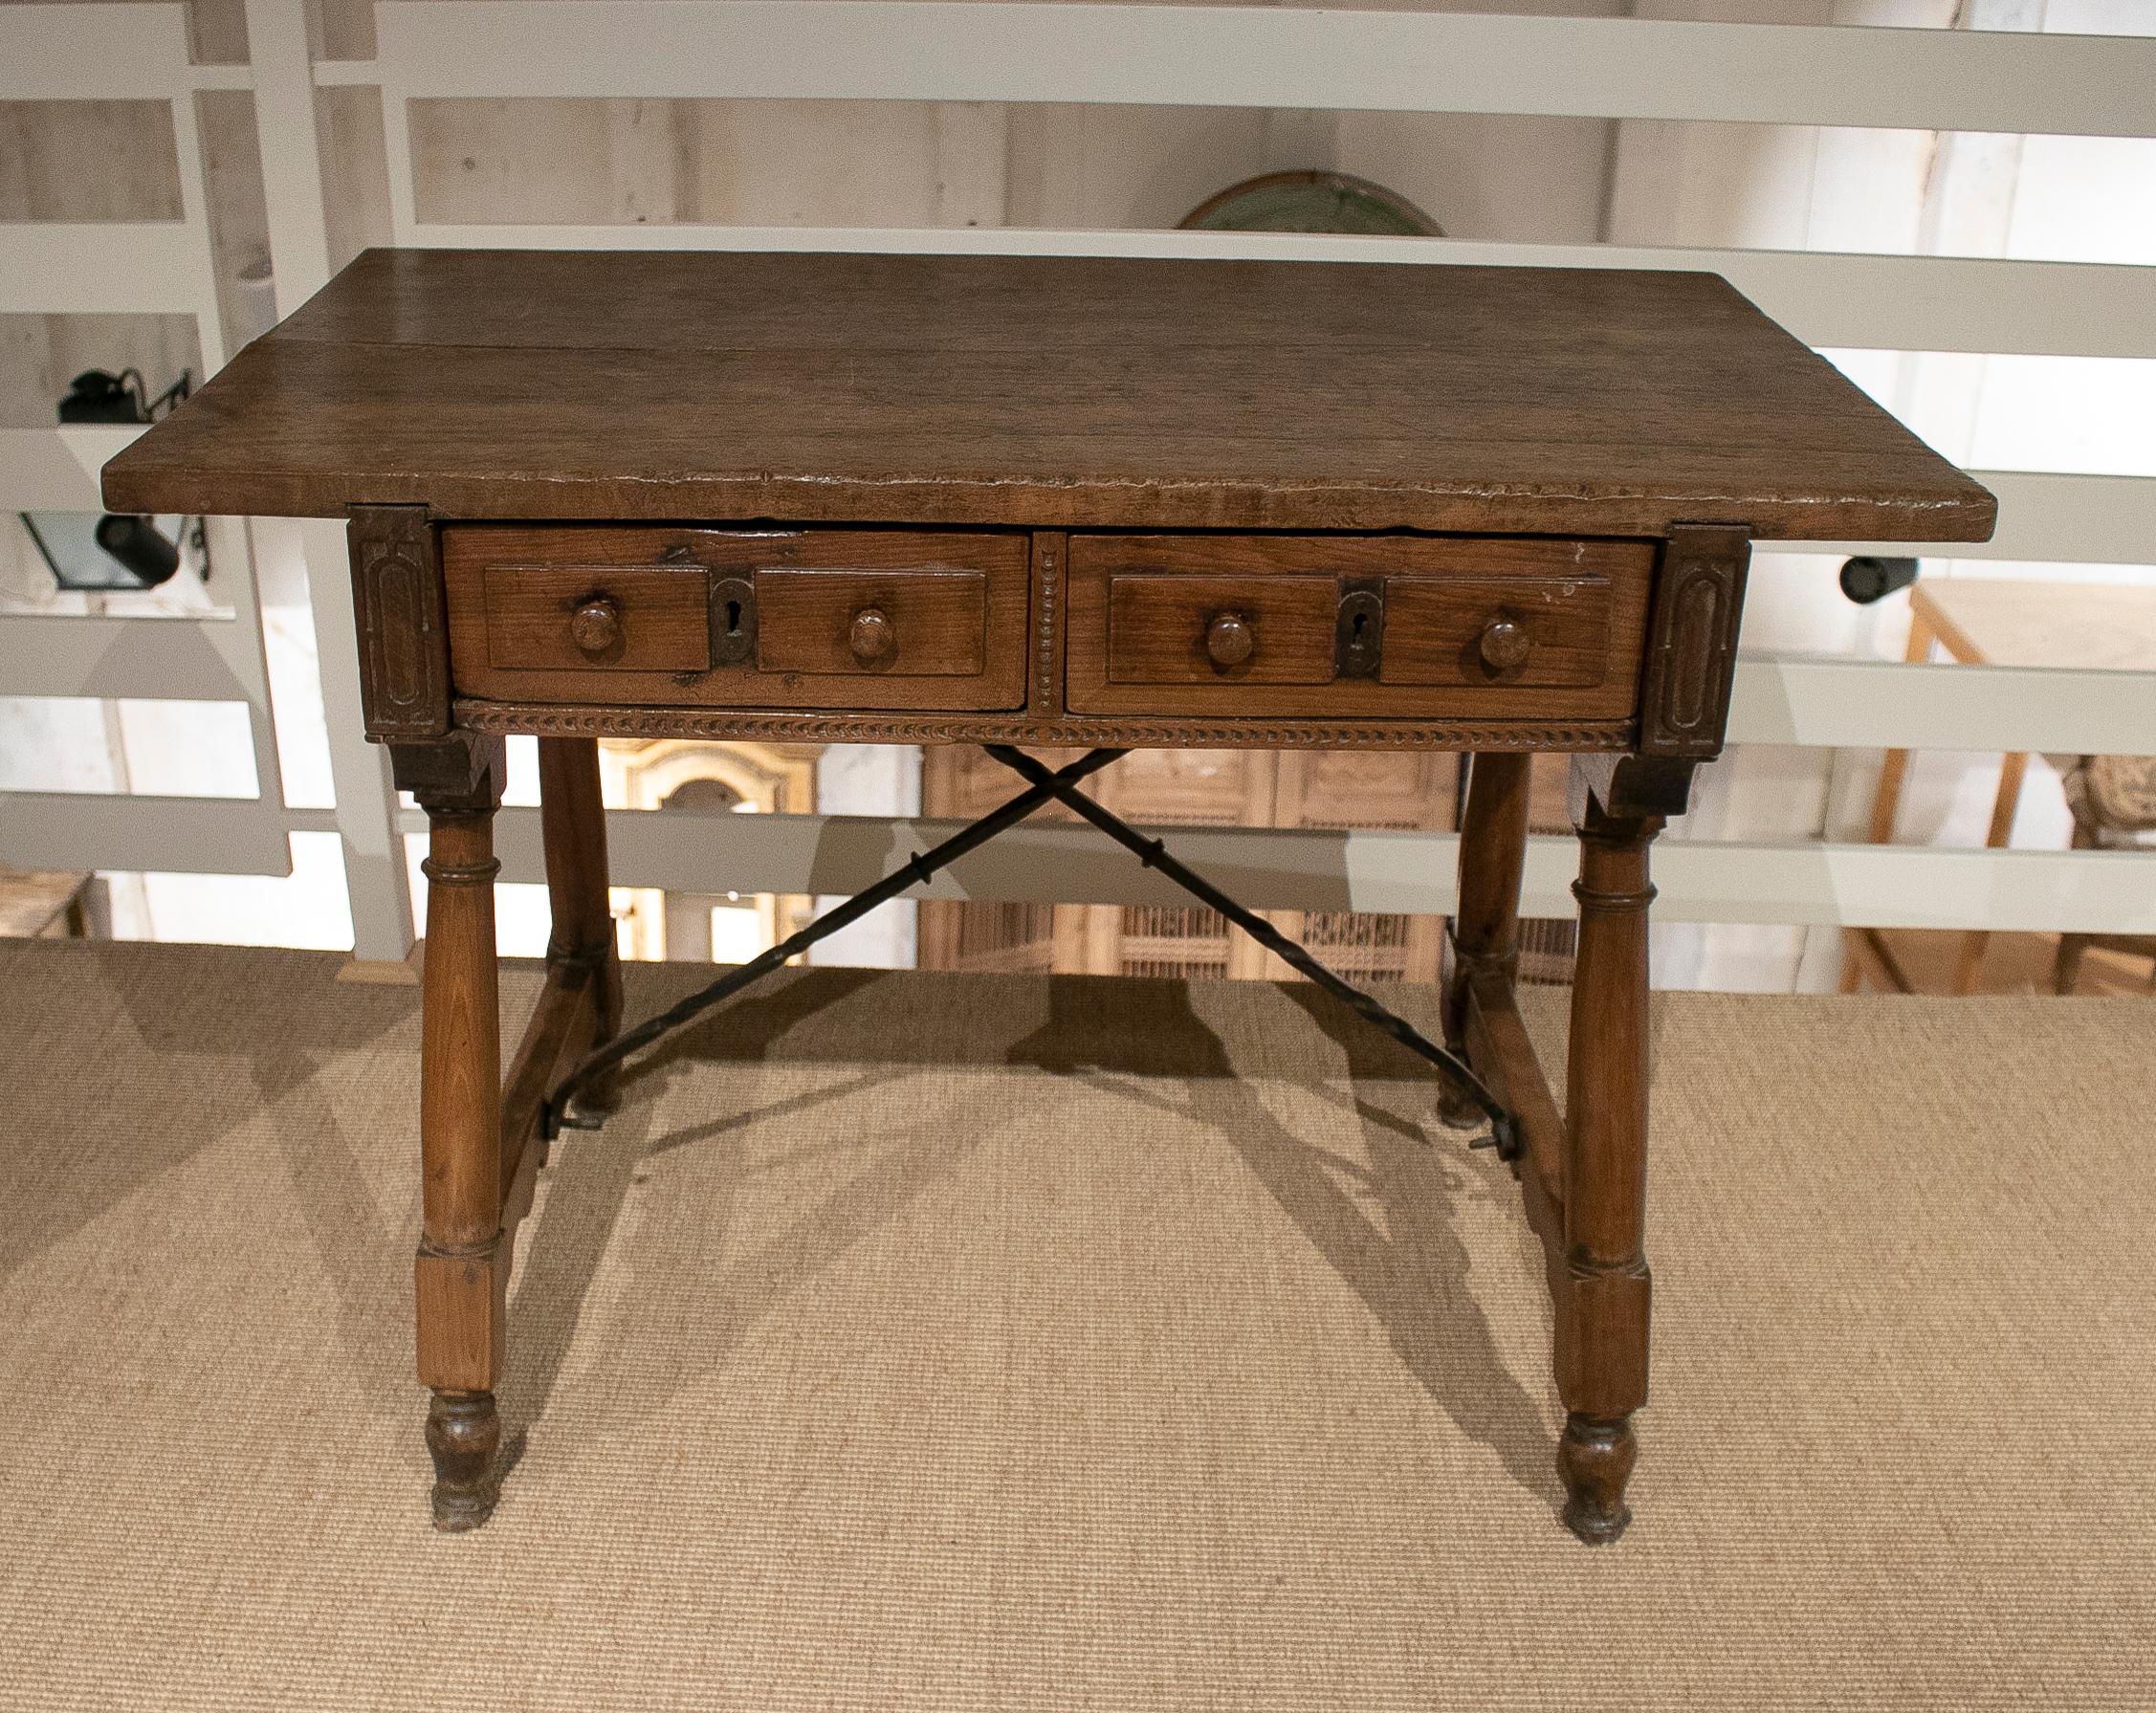 Antique 17th century Spanish walnut 2-drawer table with original iron hardware.